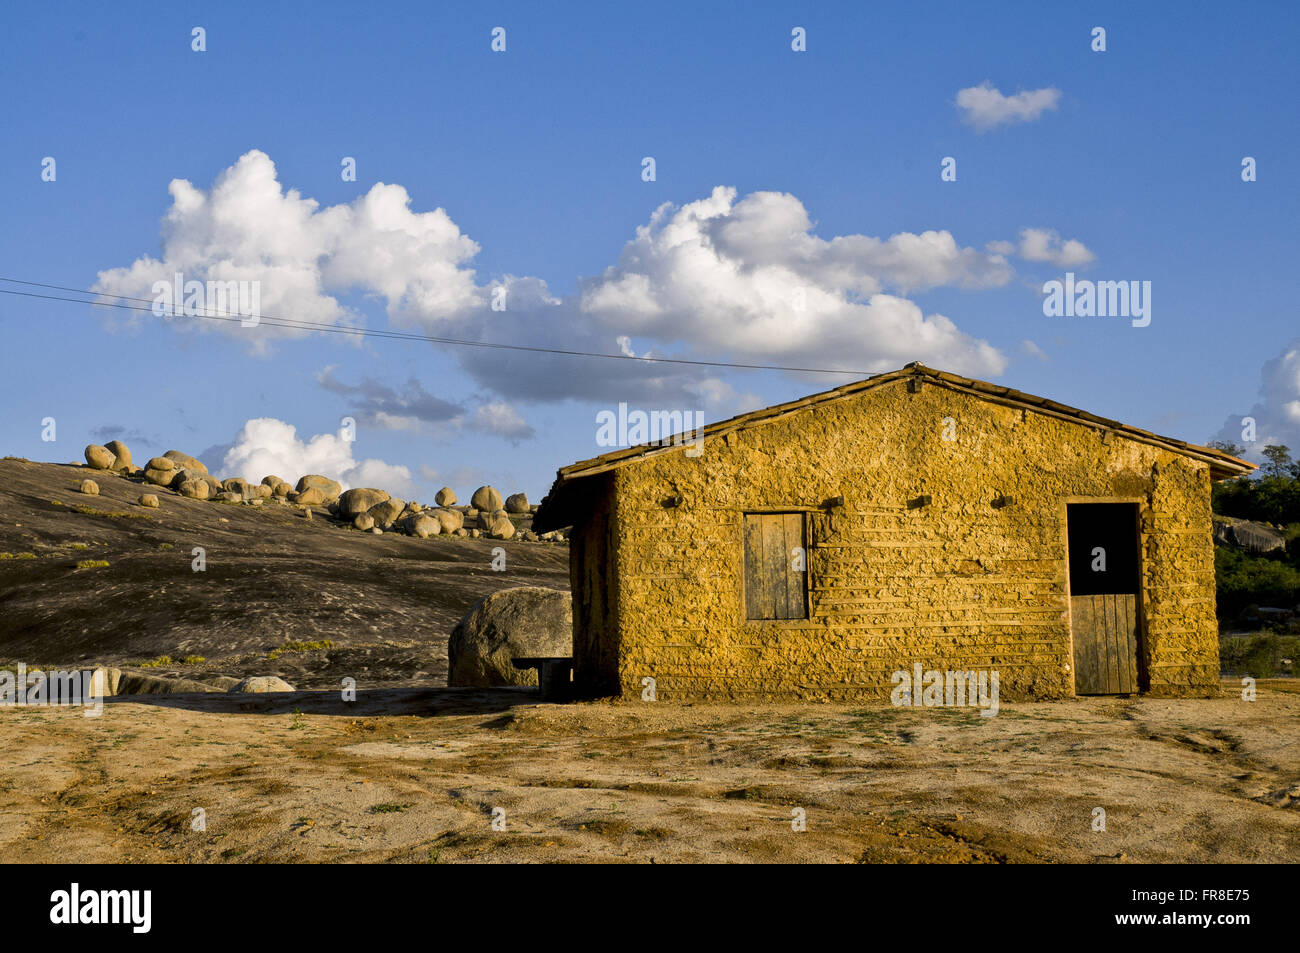 Habitation in Lajedo of Father Matthew - Paraiba cariri Stock Photo